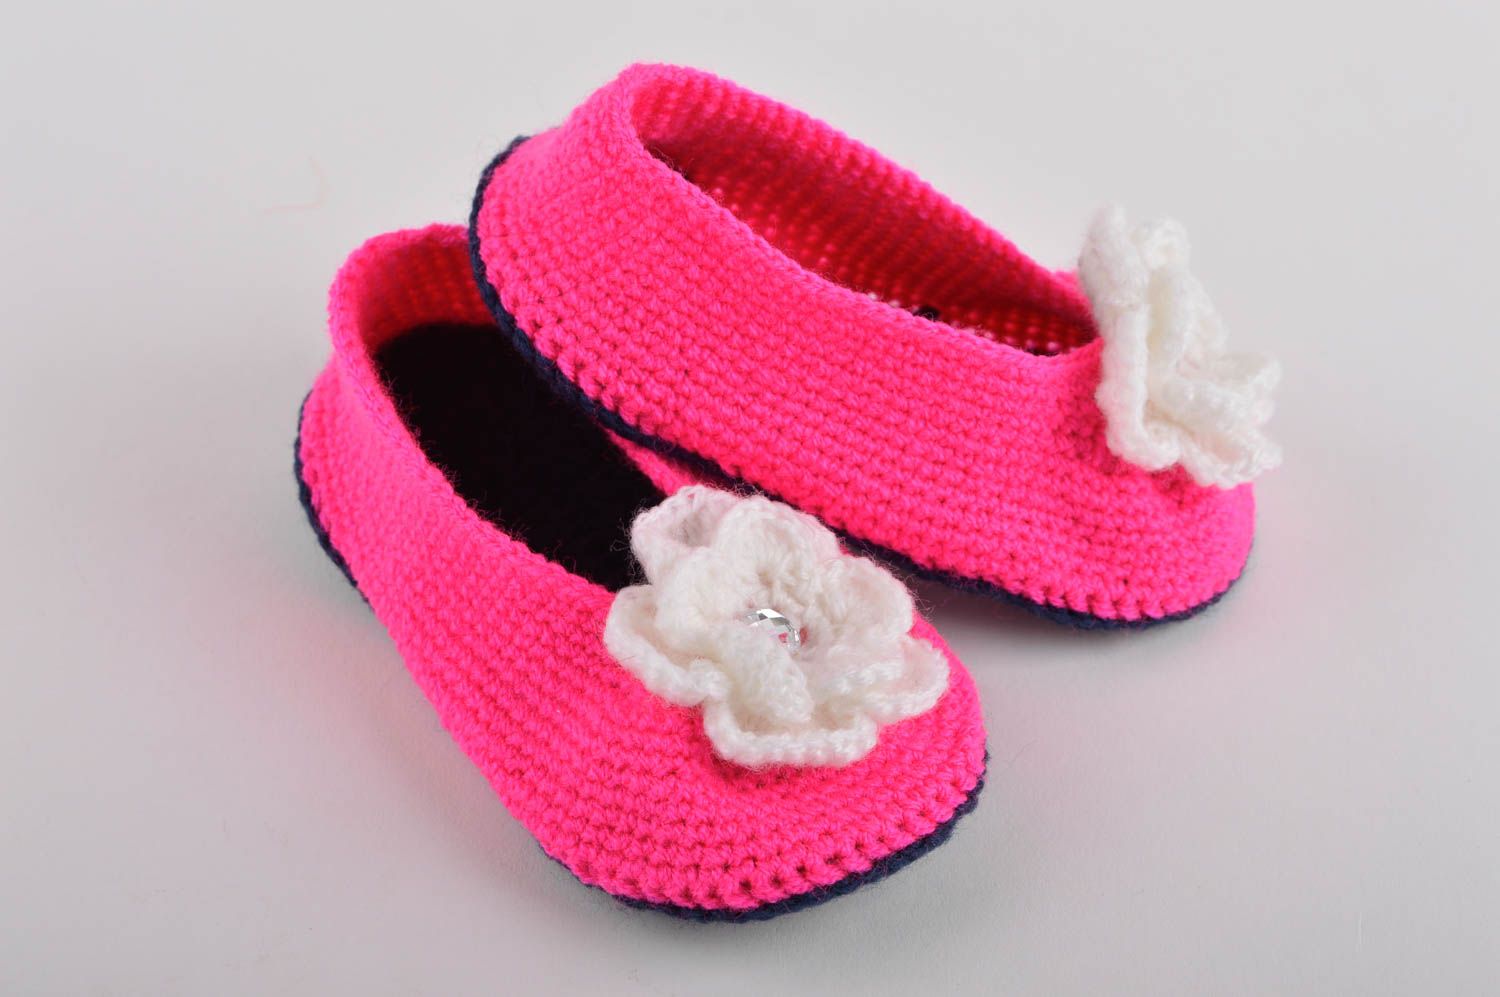 Handmade crocheted pink slippers unusual warm footwear home slippers for kids photo 2